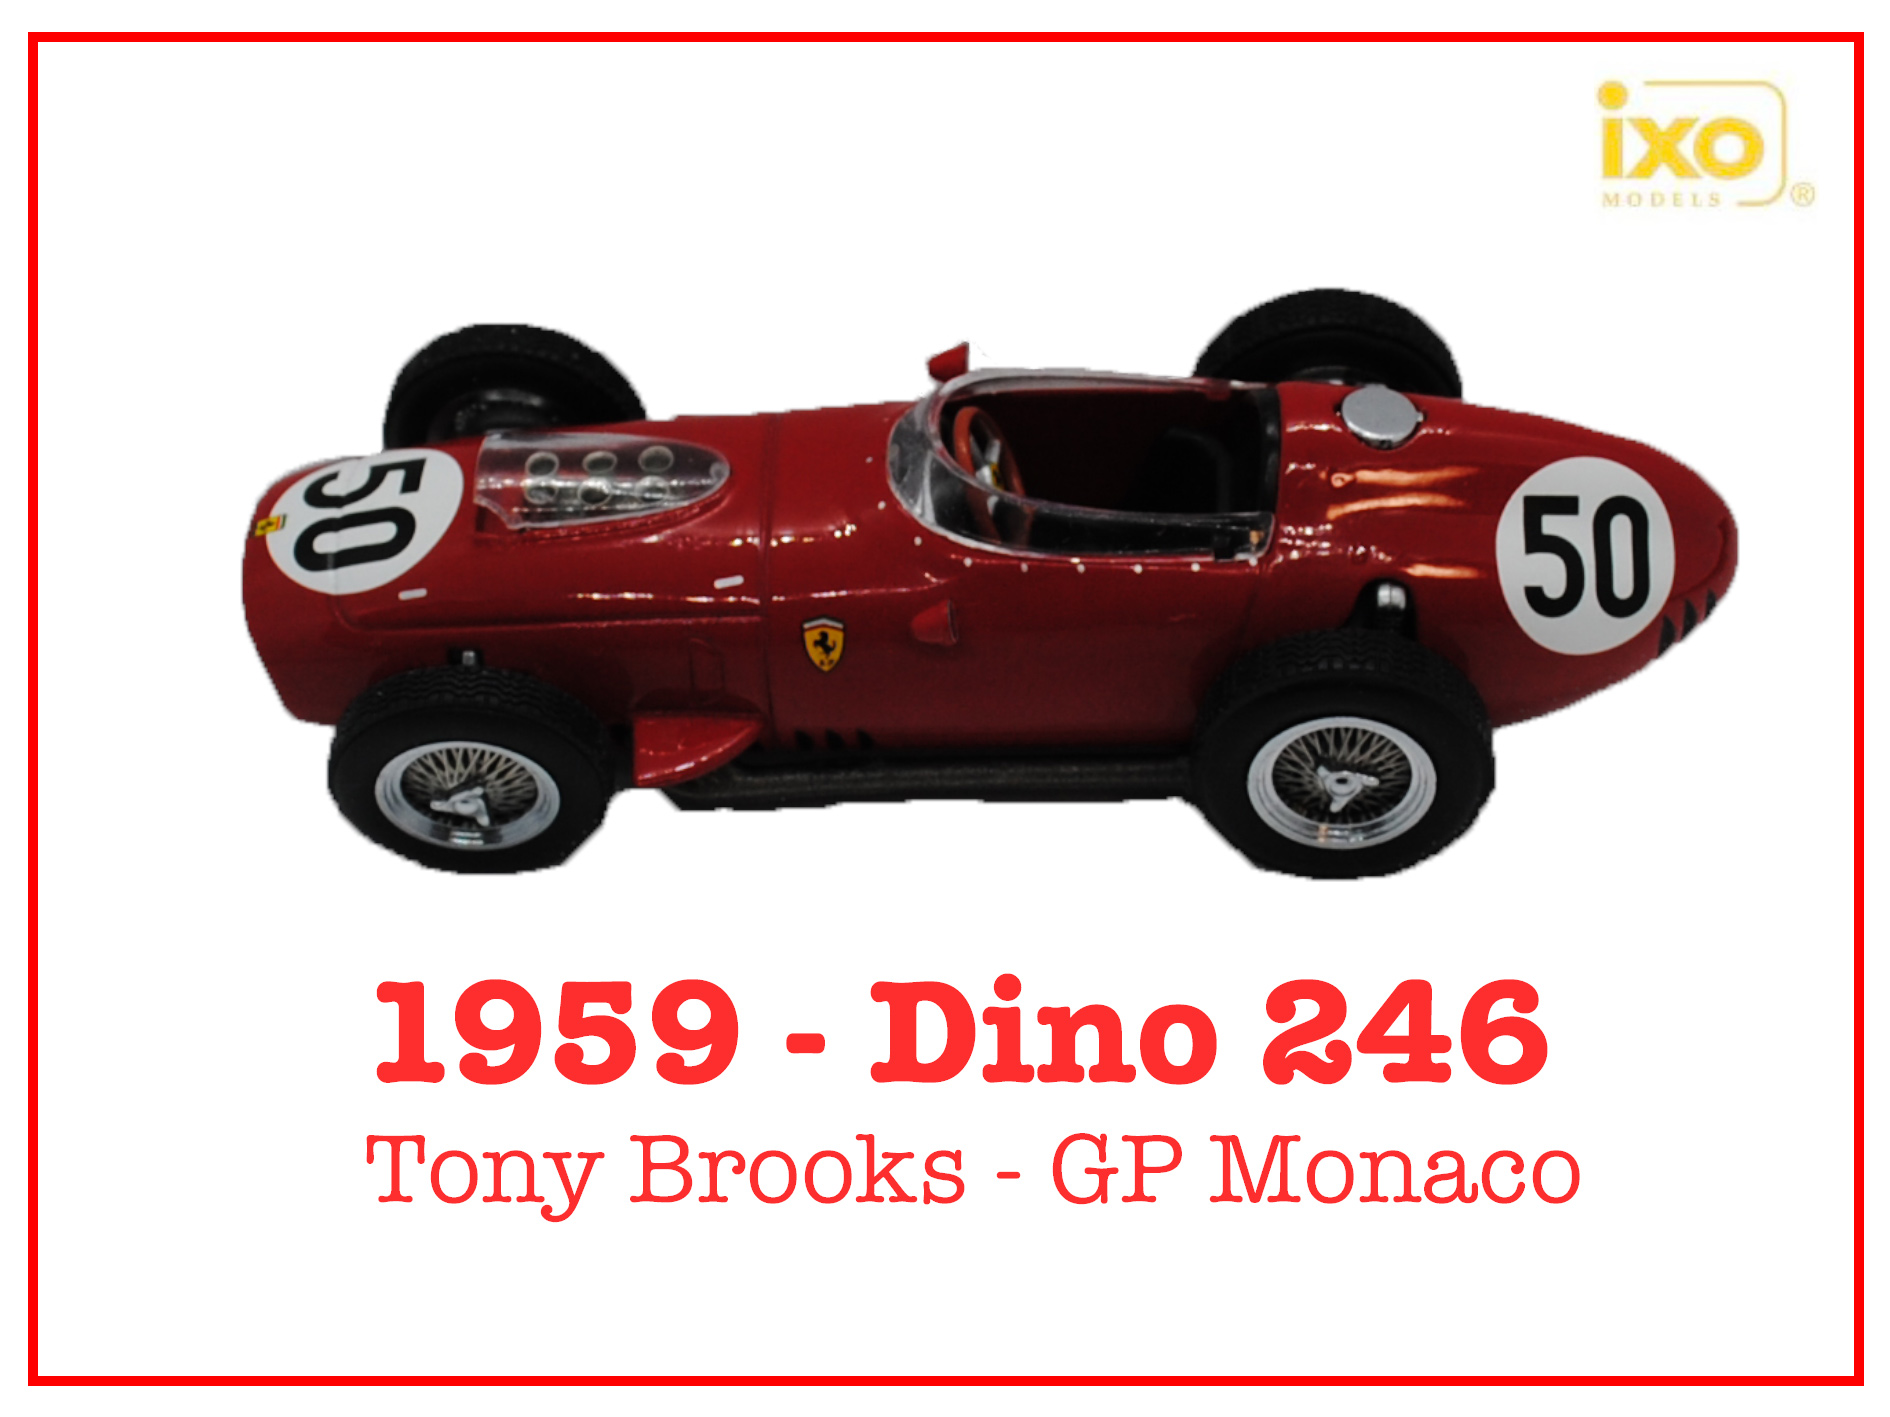 Immagine Dino 246 Tony Brooks GP Monaco